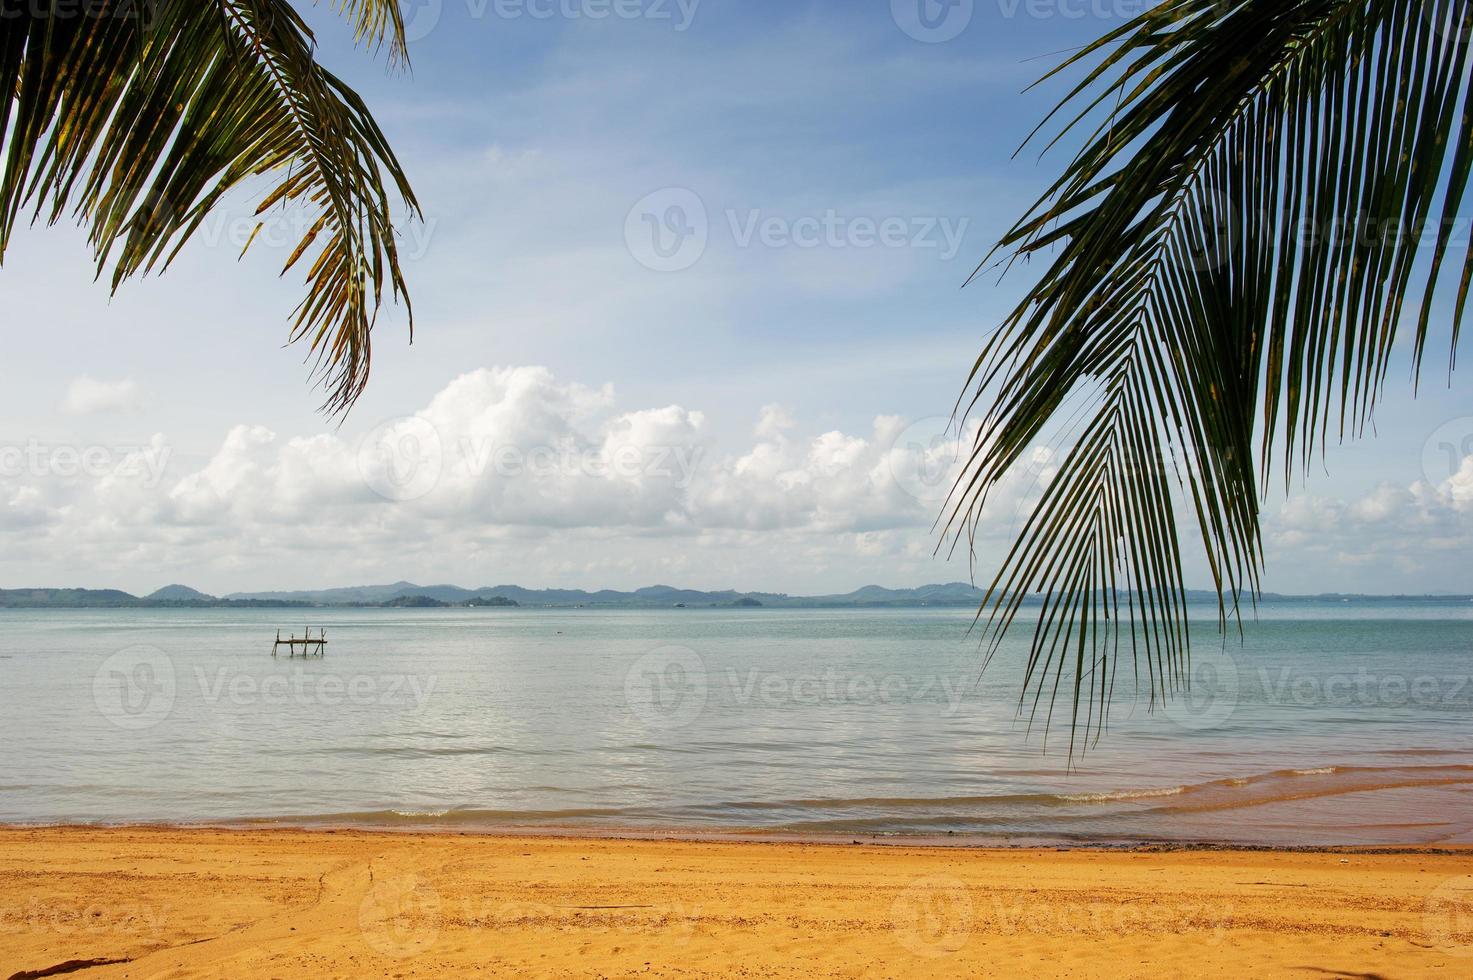 Coconut trees and sea, beautiful natural scenery photo